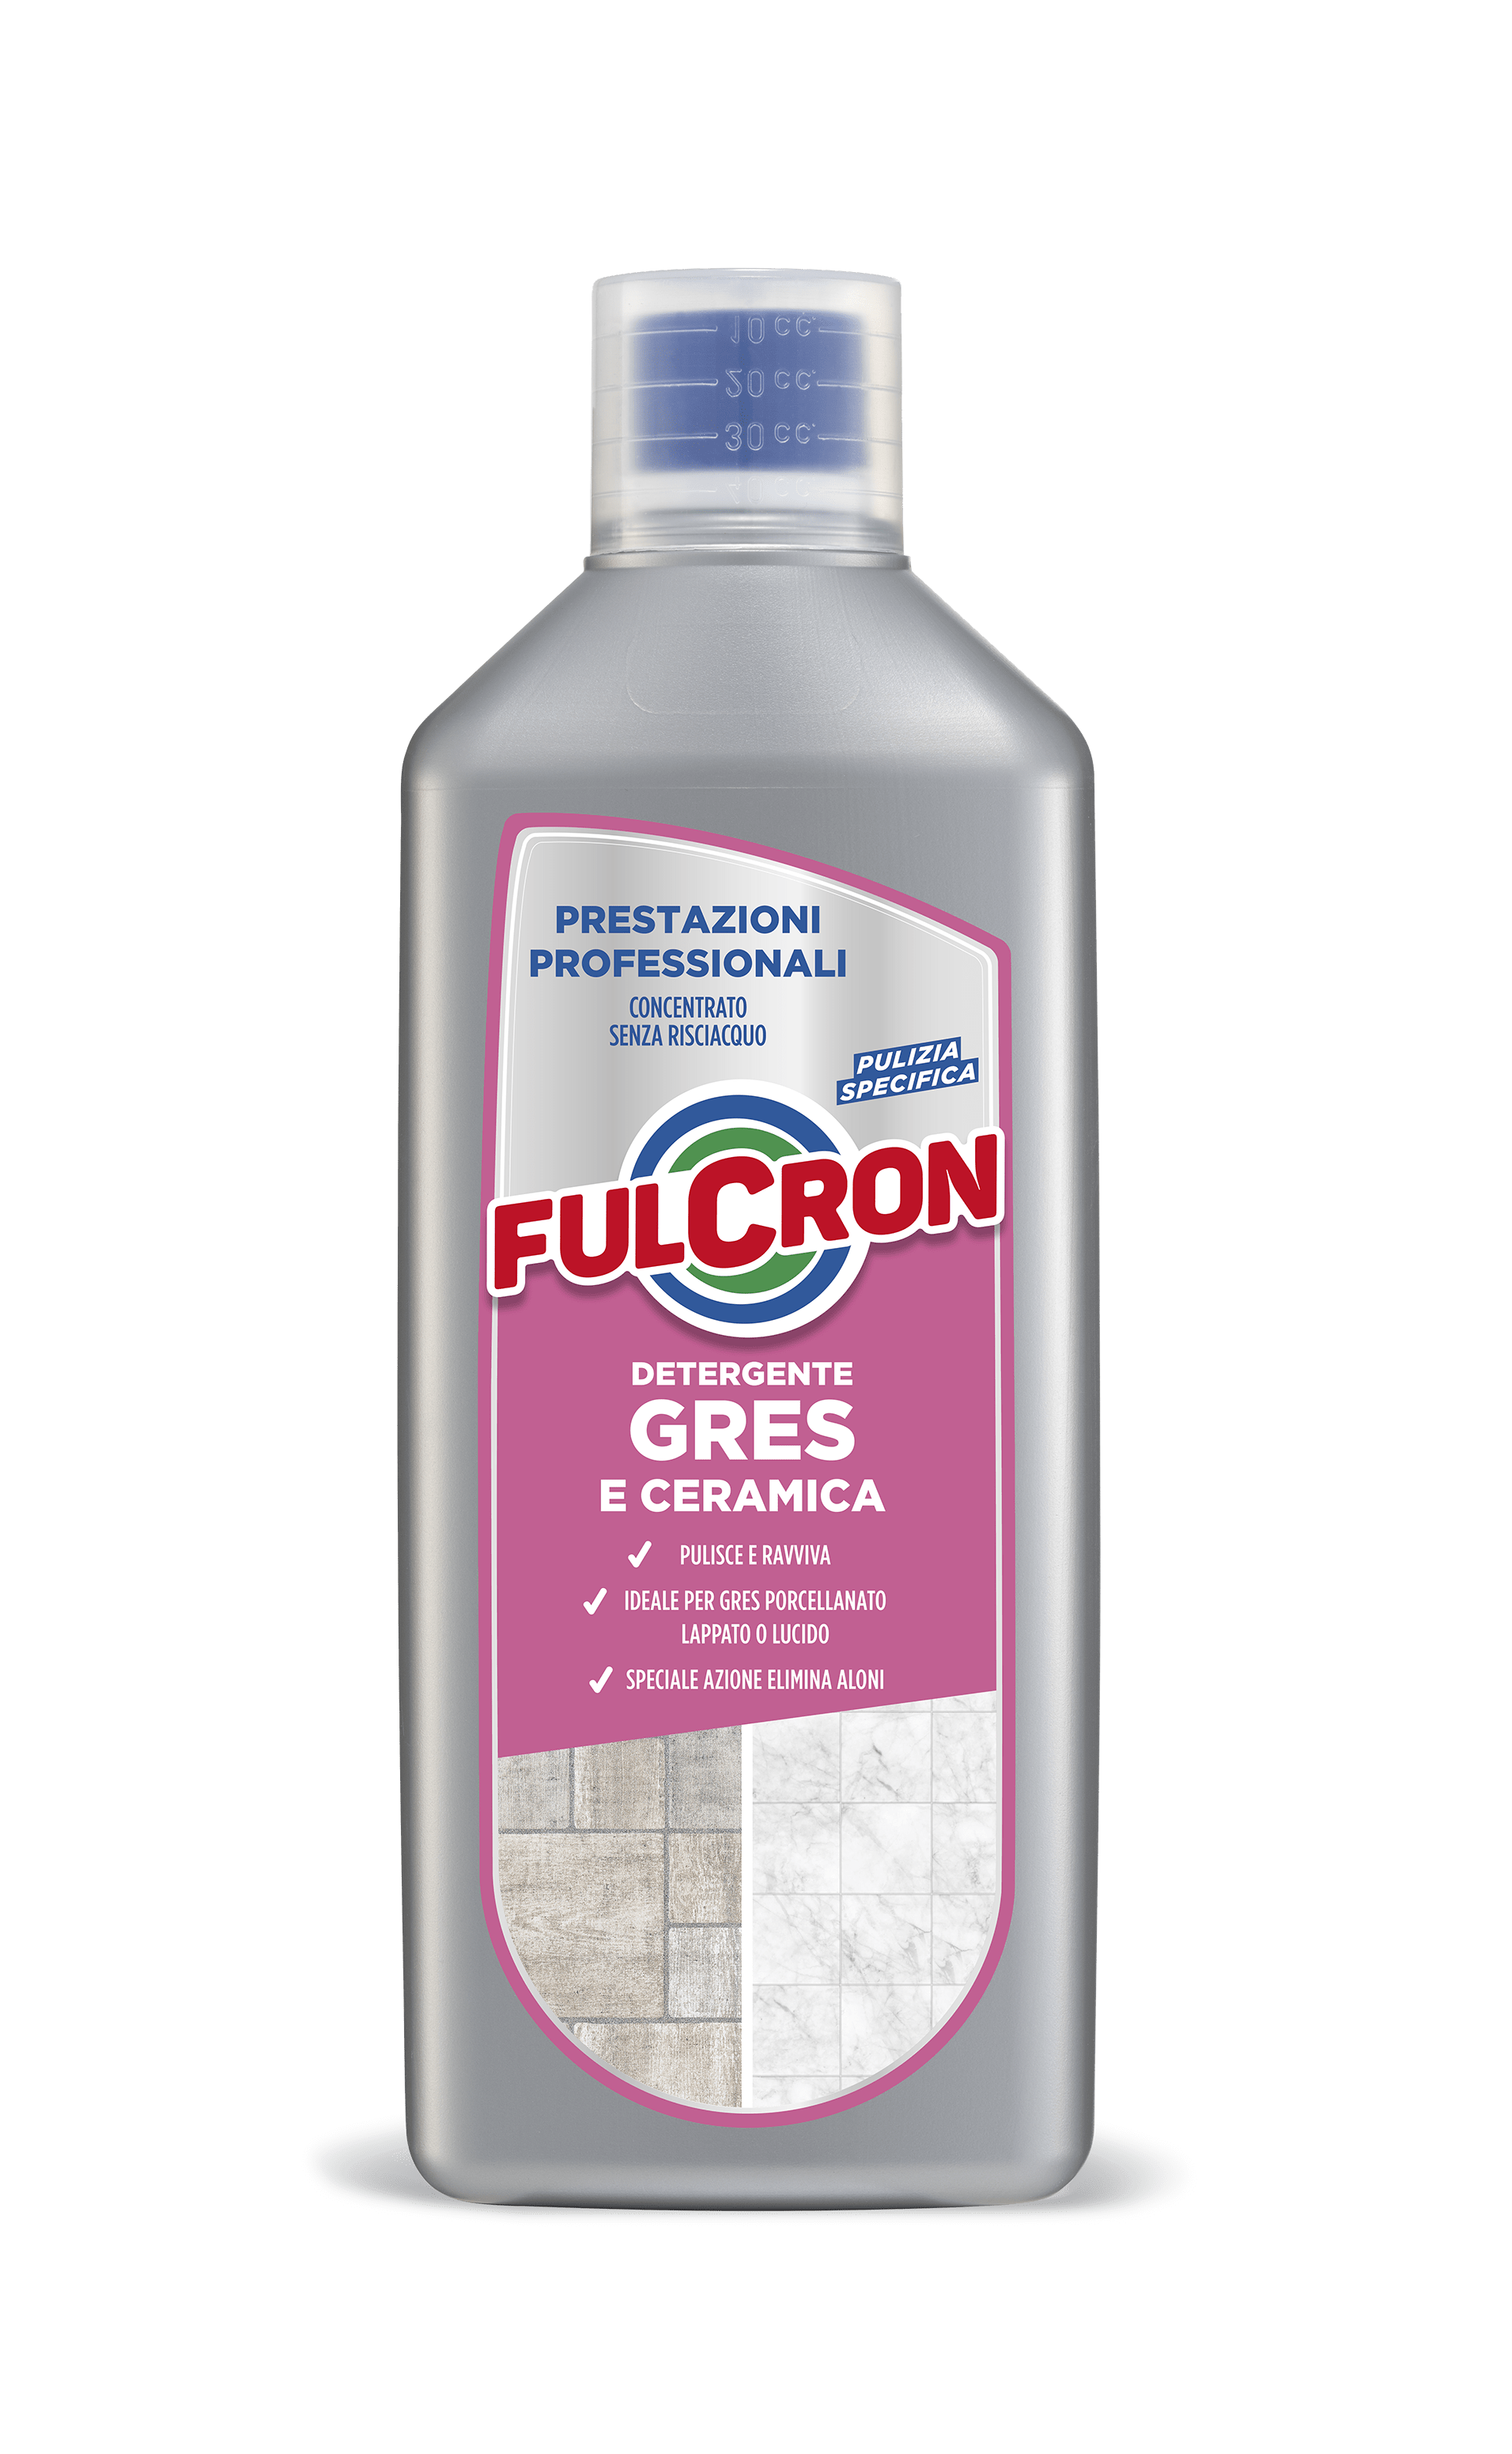 Detergente Gres e Ceramica - Fulcron